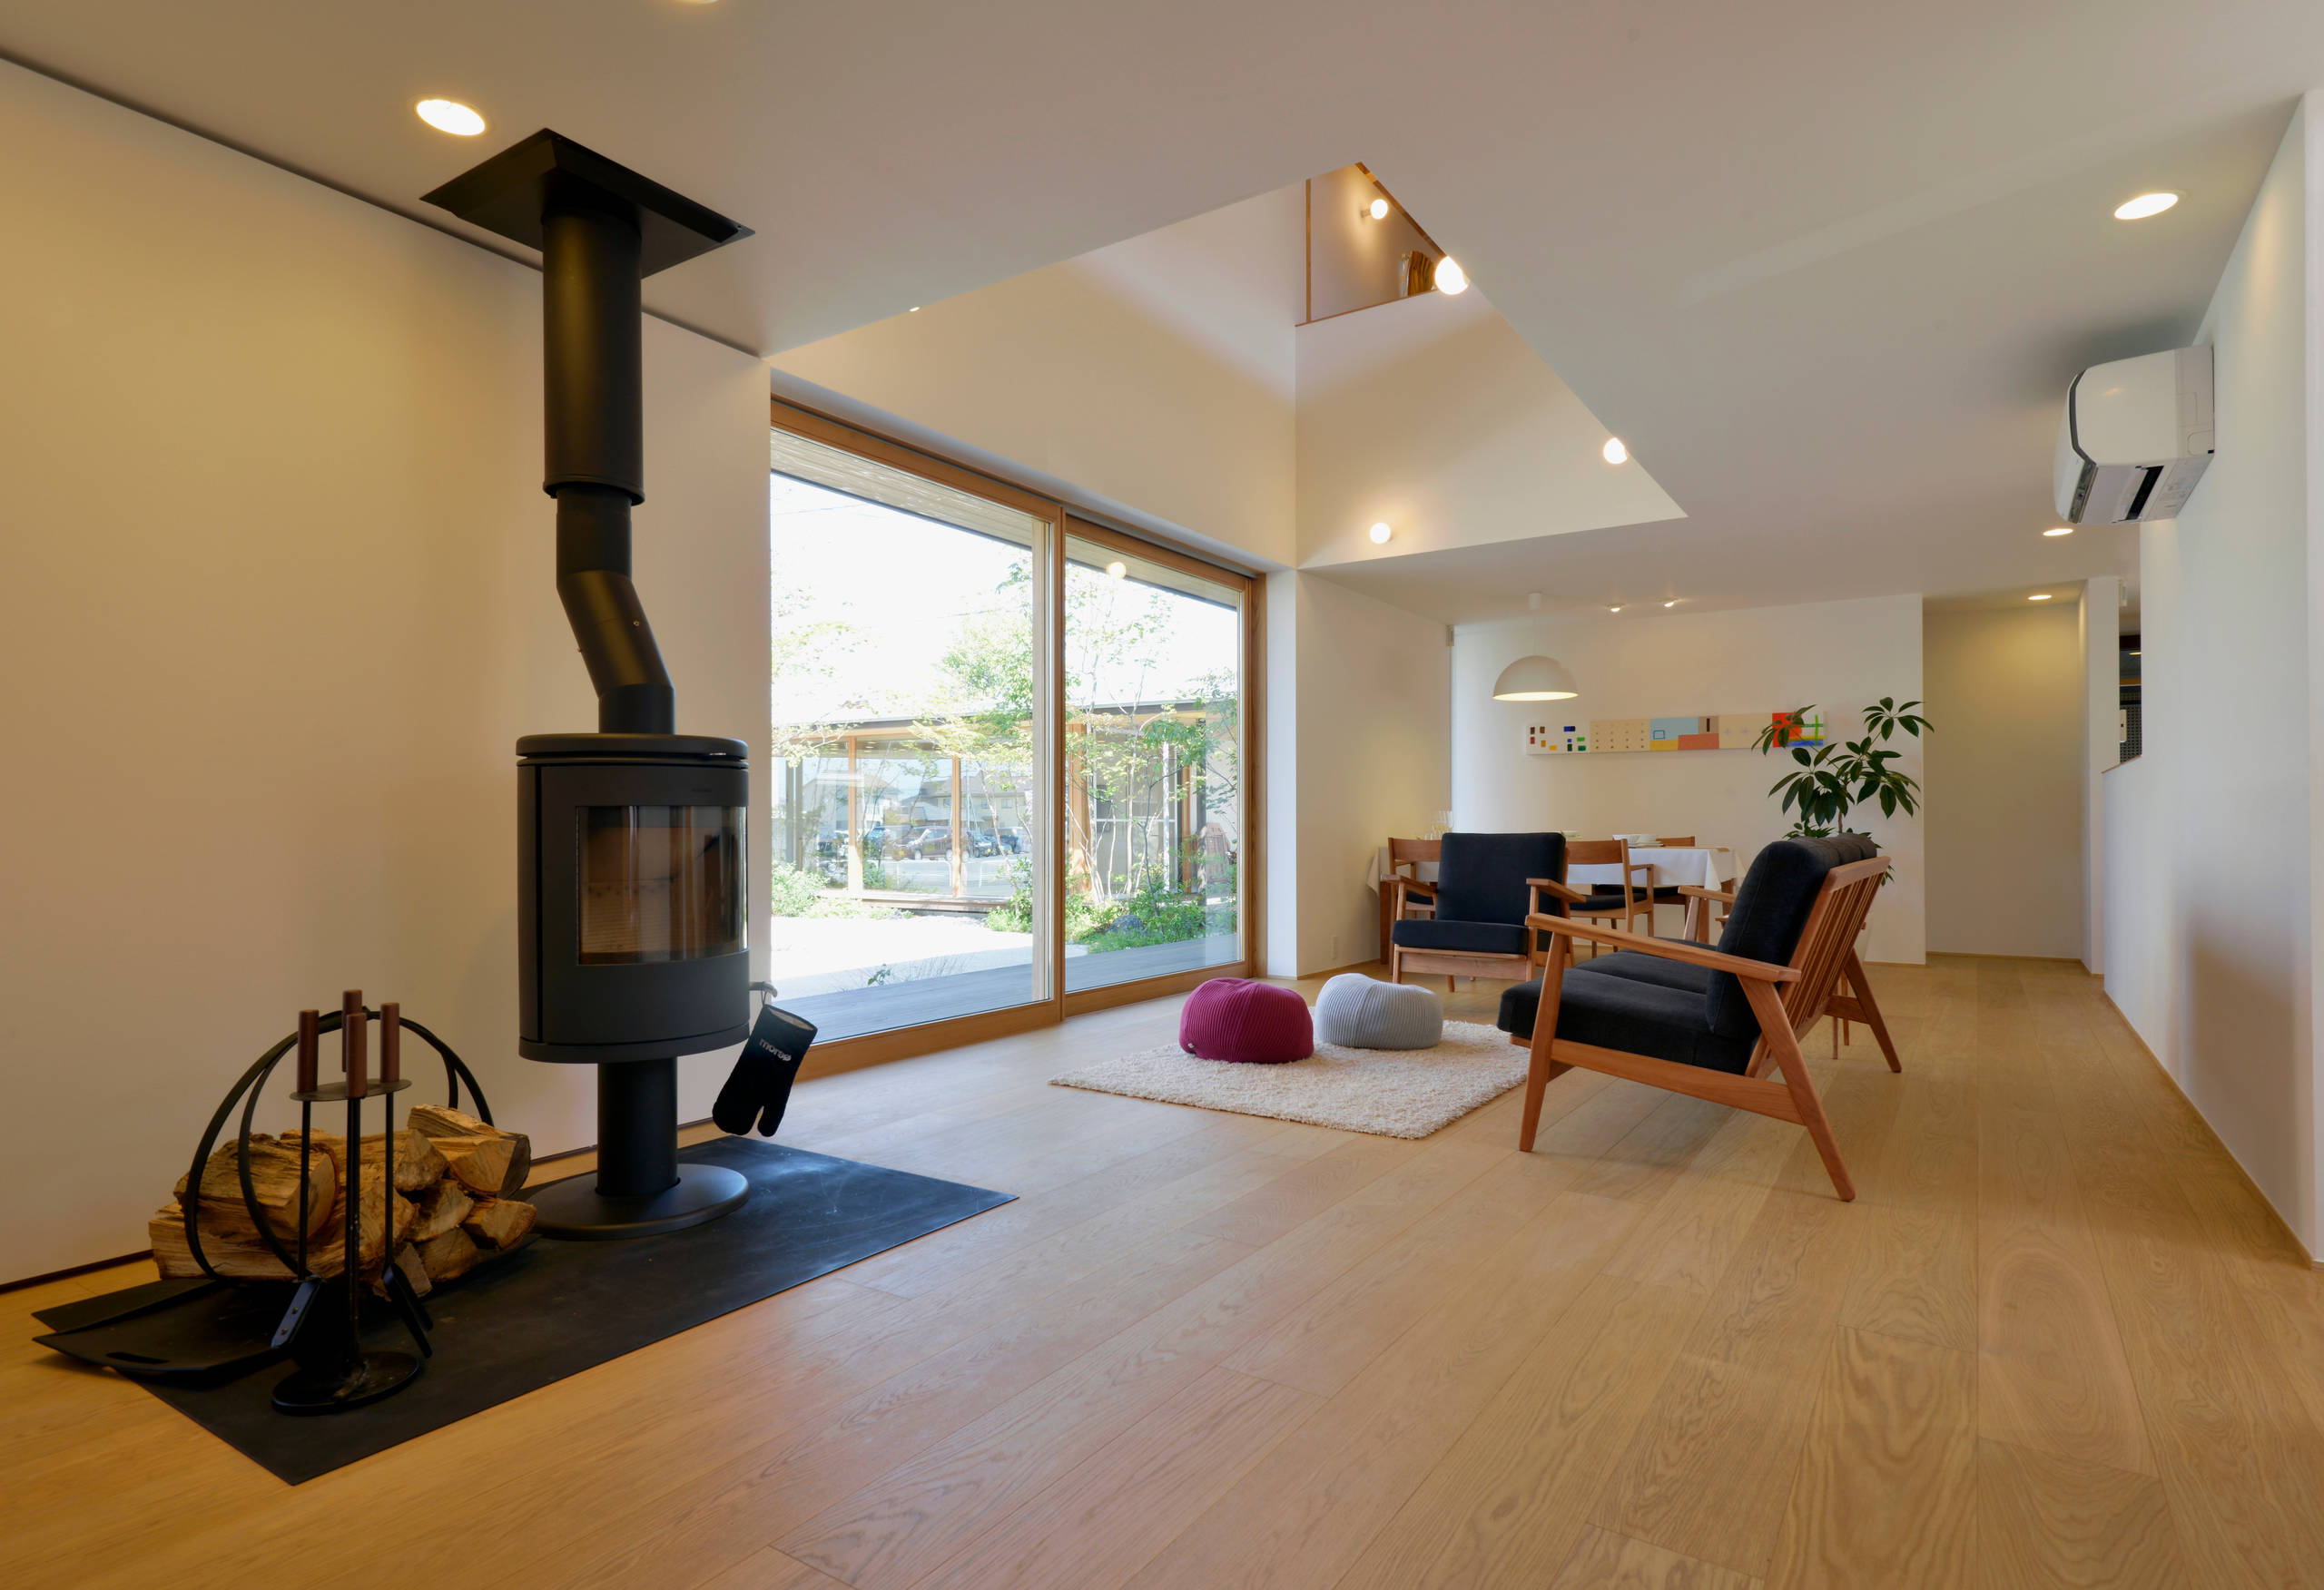 living modern room beautiful designs desperately needs rooms source architectureartdesigns